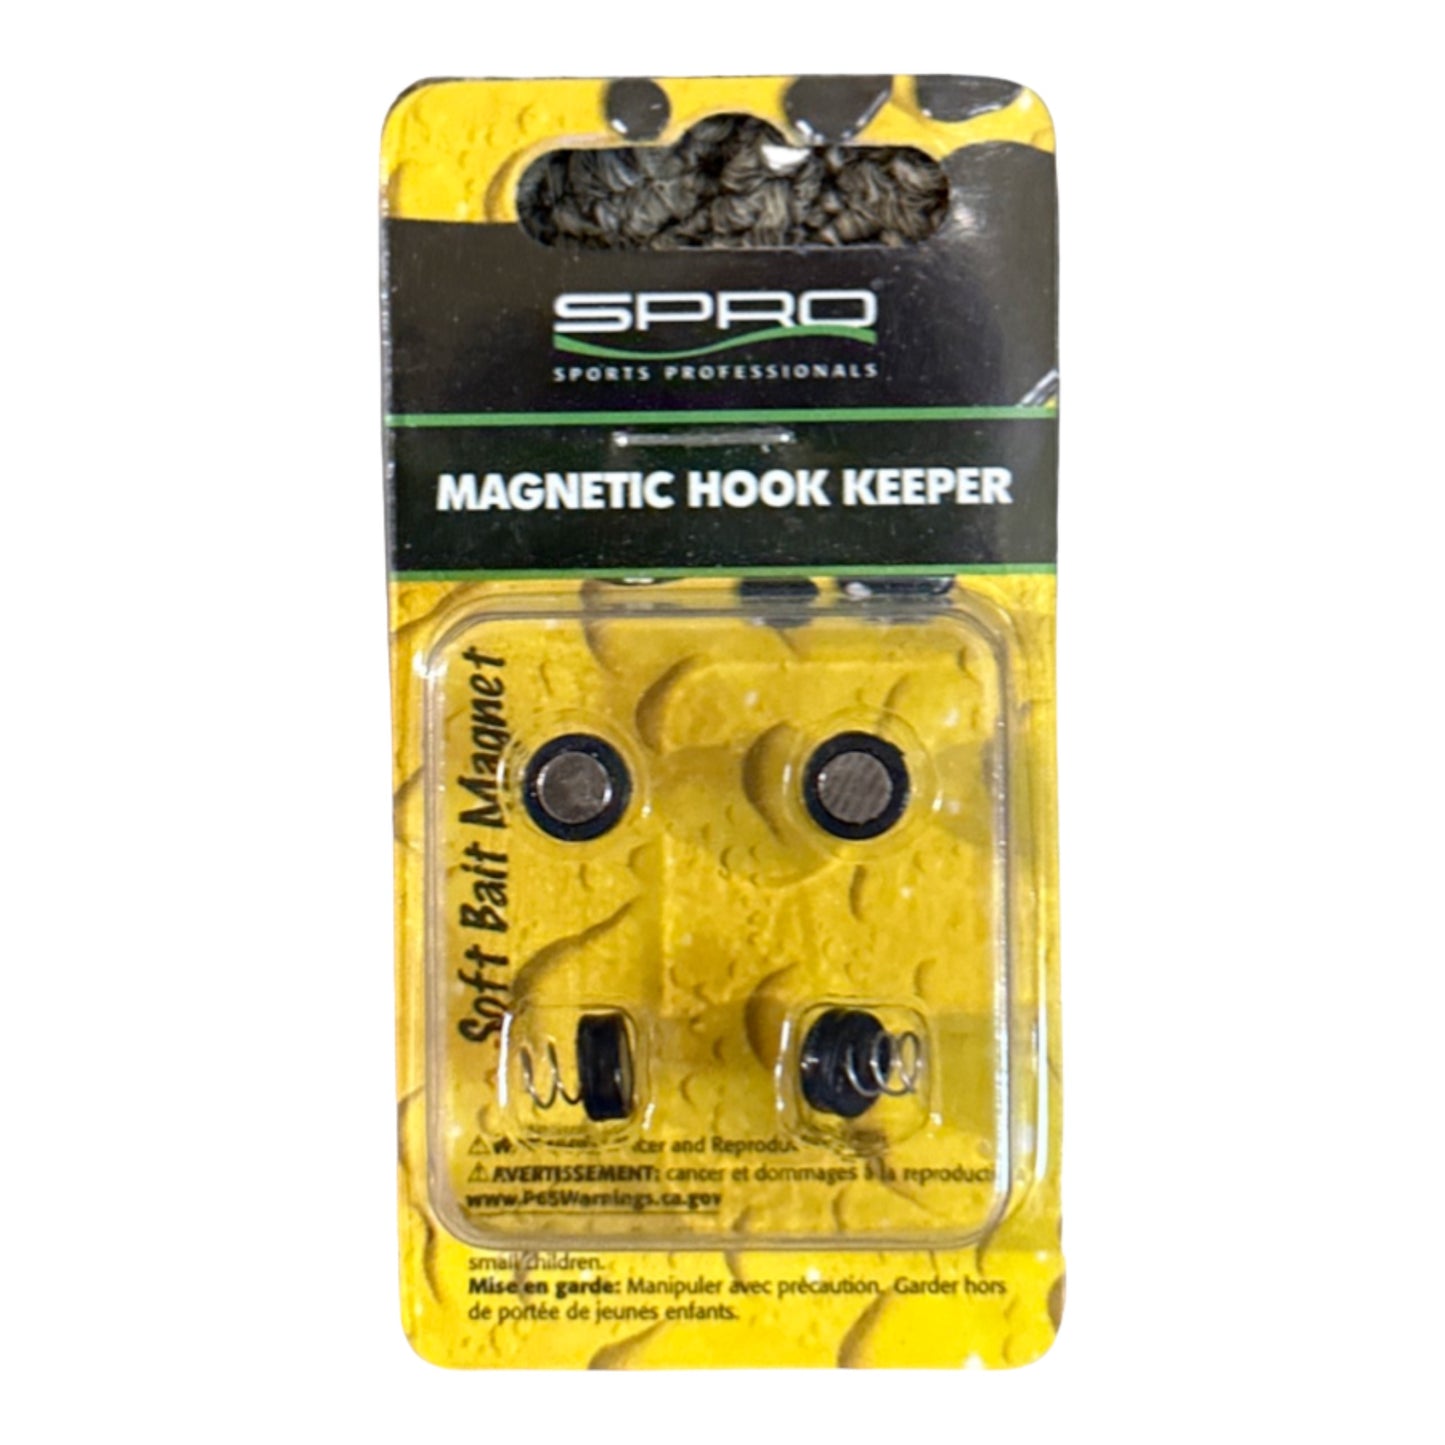 Spro Magnetic Hook Keeper